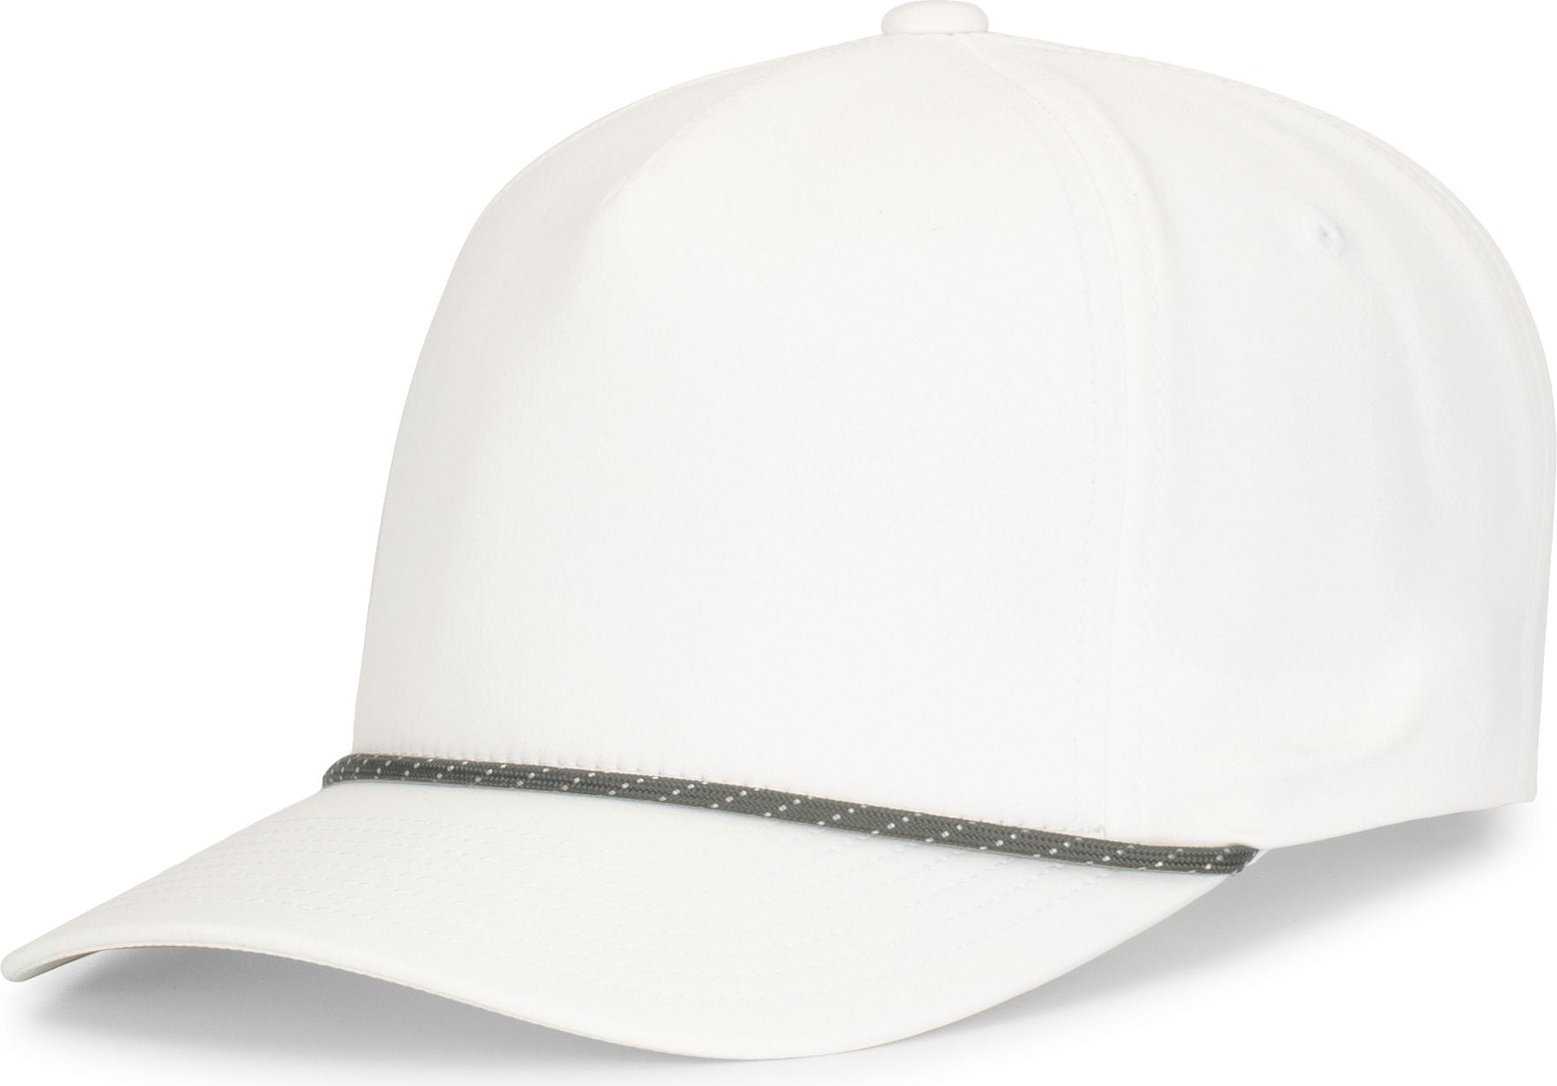 Pacific Headwear P421 Weekender Cap - White Graphite White - HIT a Double